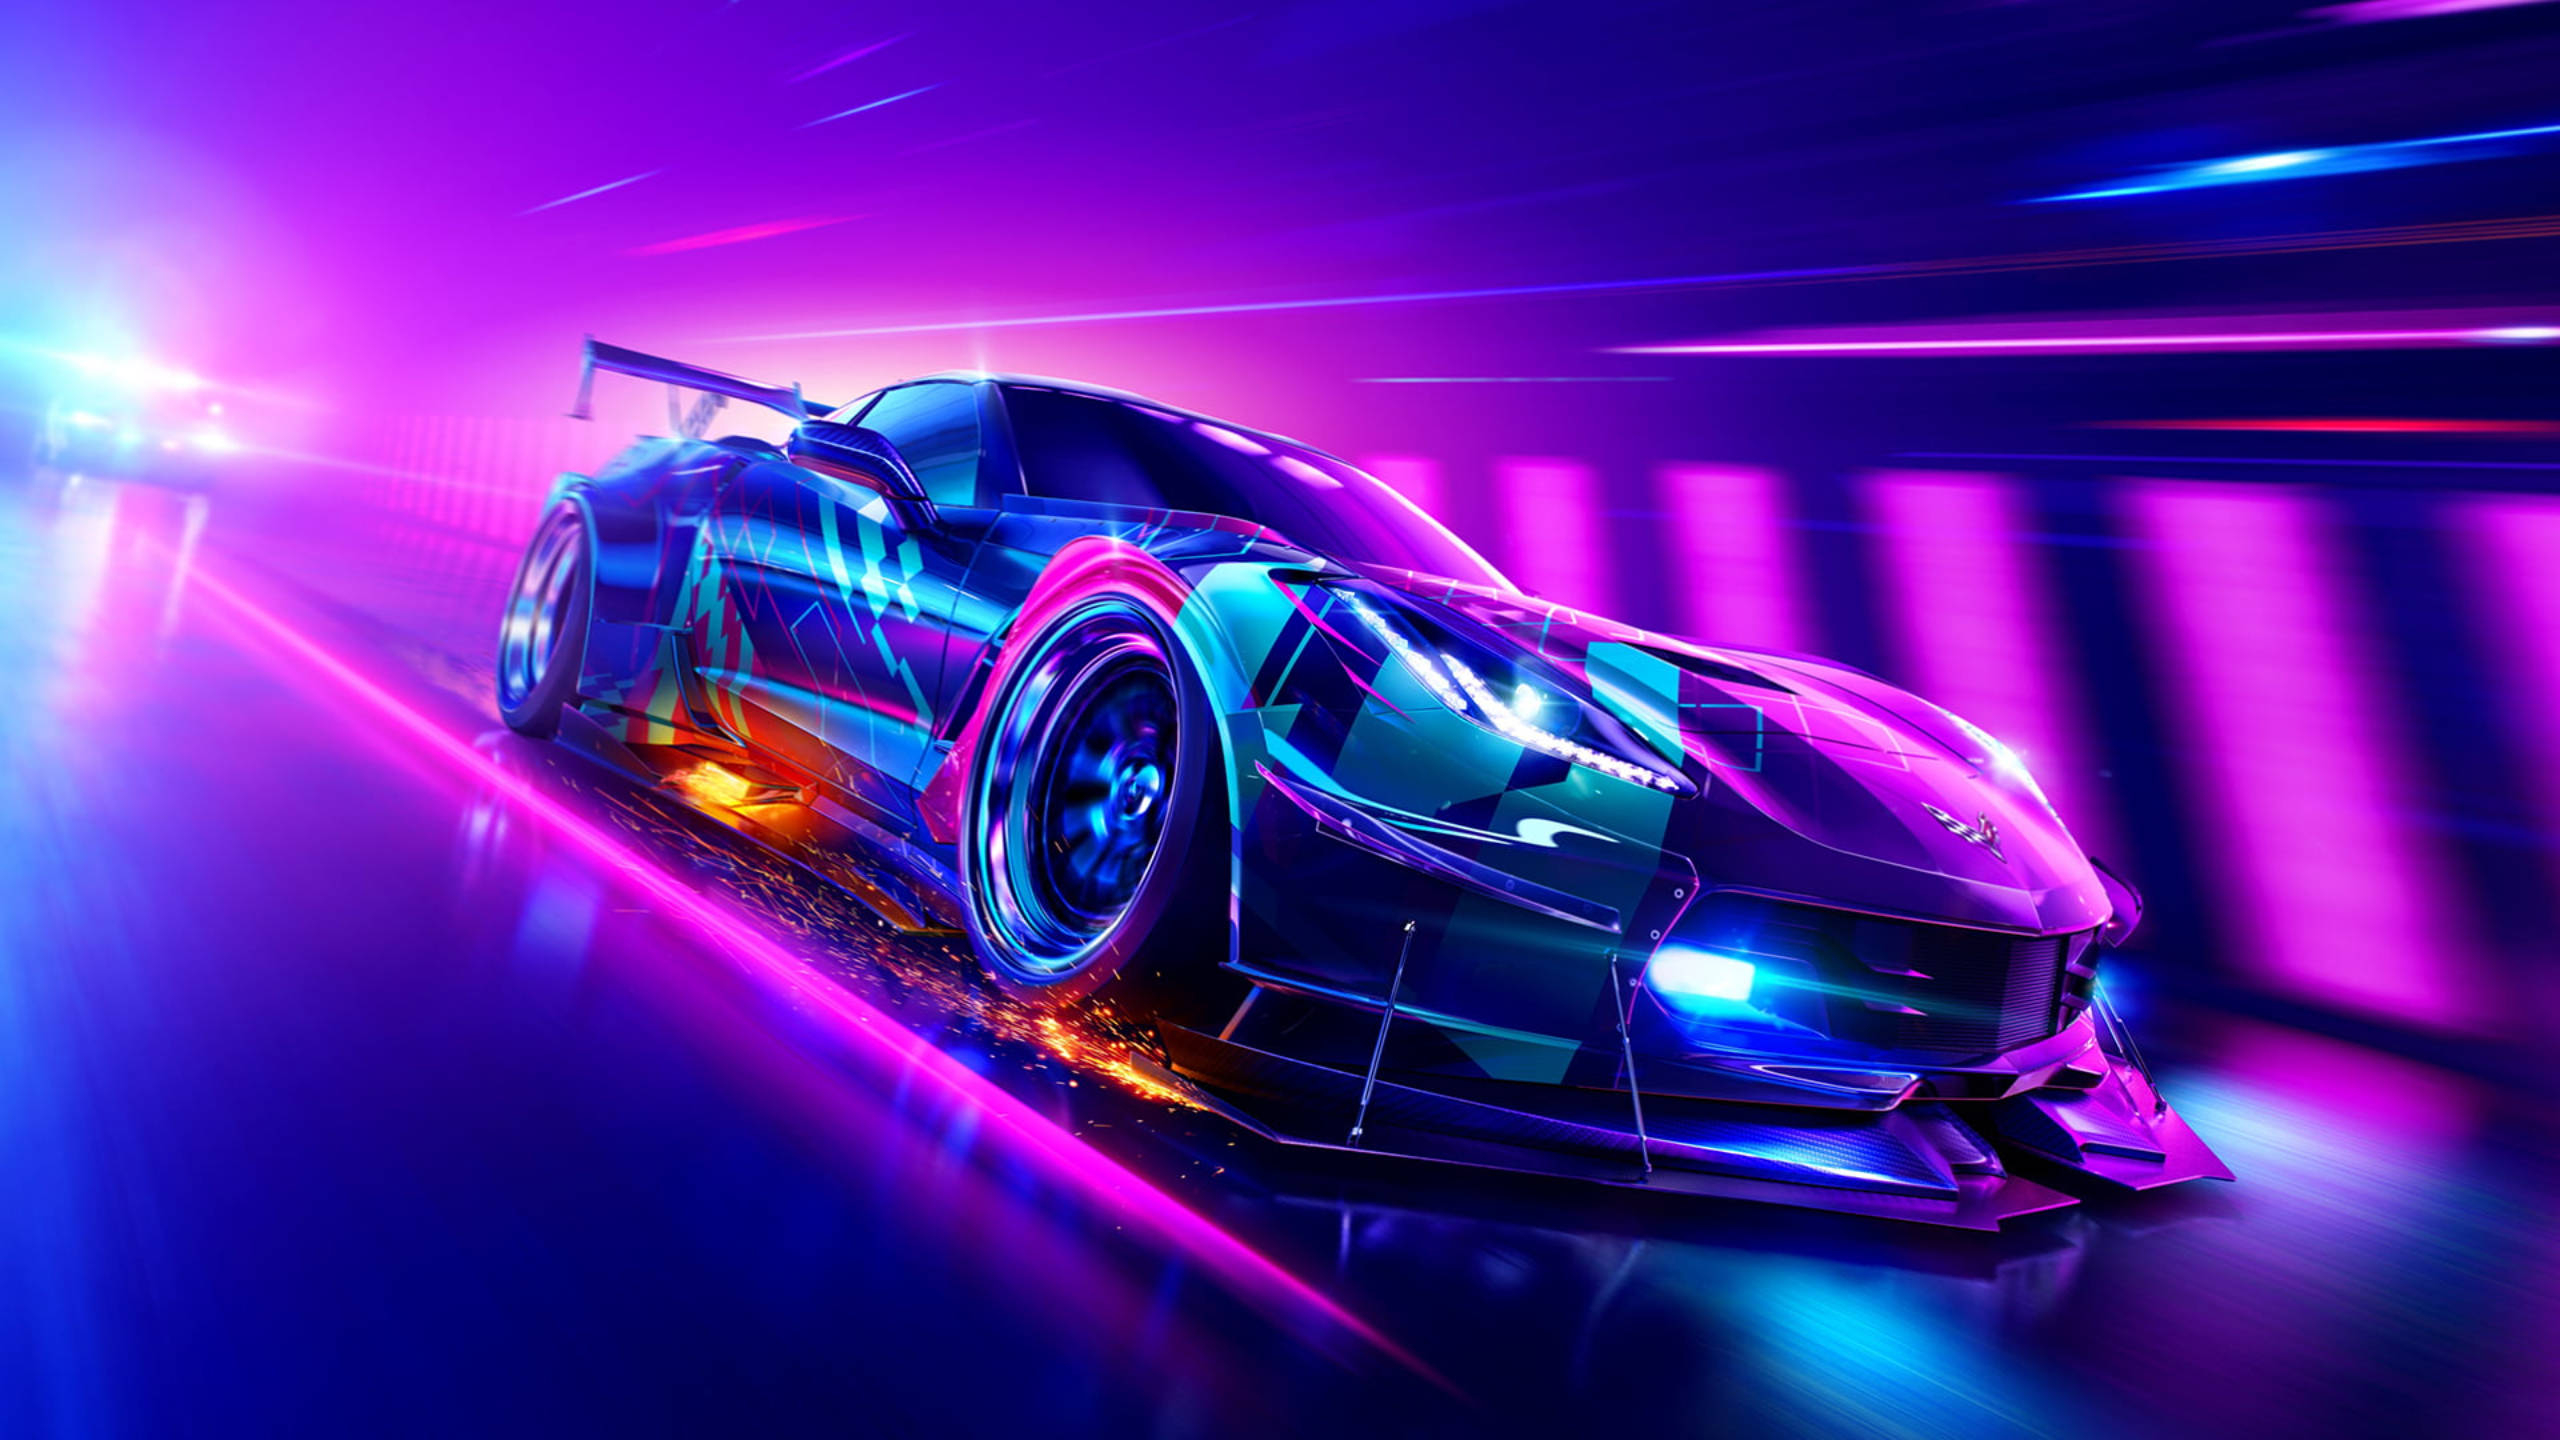 2560x1440 Download Purple Neon Aesthetic Racing Car Wallpaper